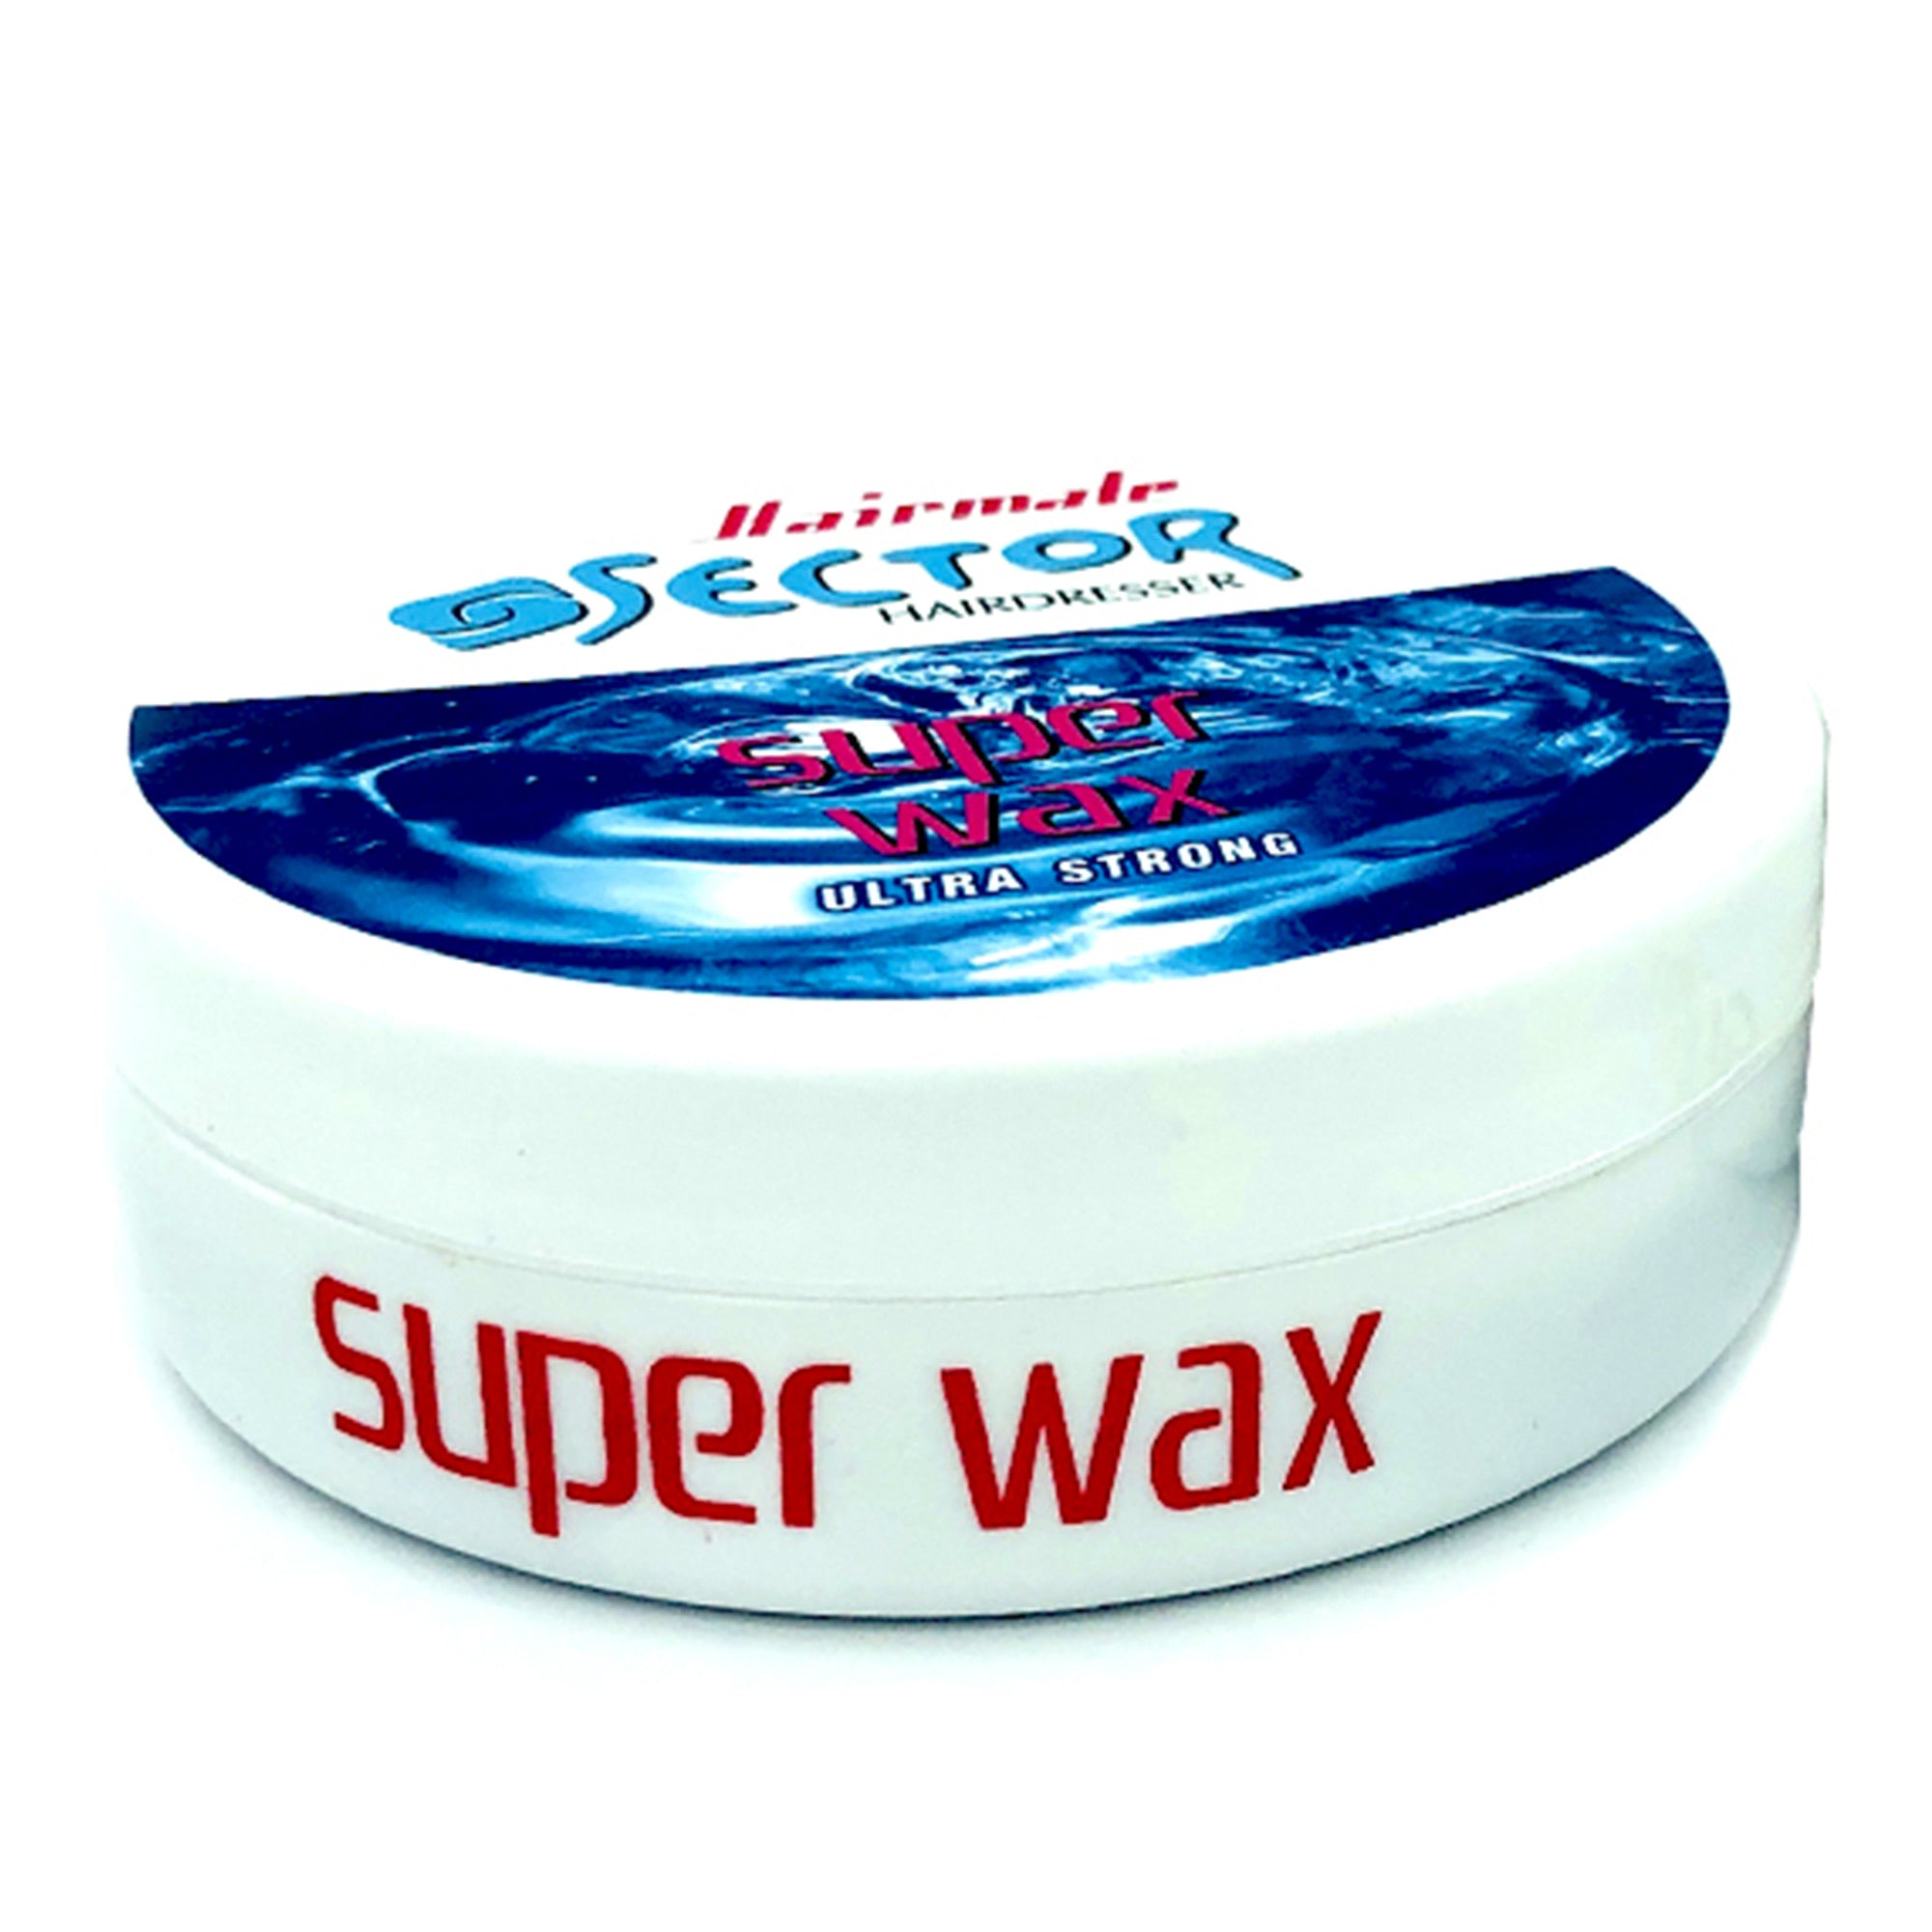 Sector - Hairmate Hairdresser Super Wax Ultra Strong 150ml